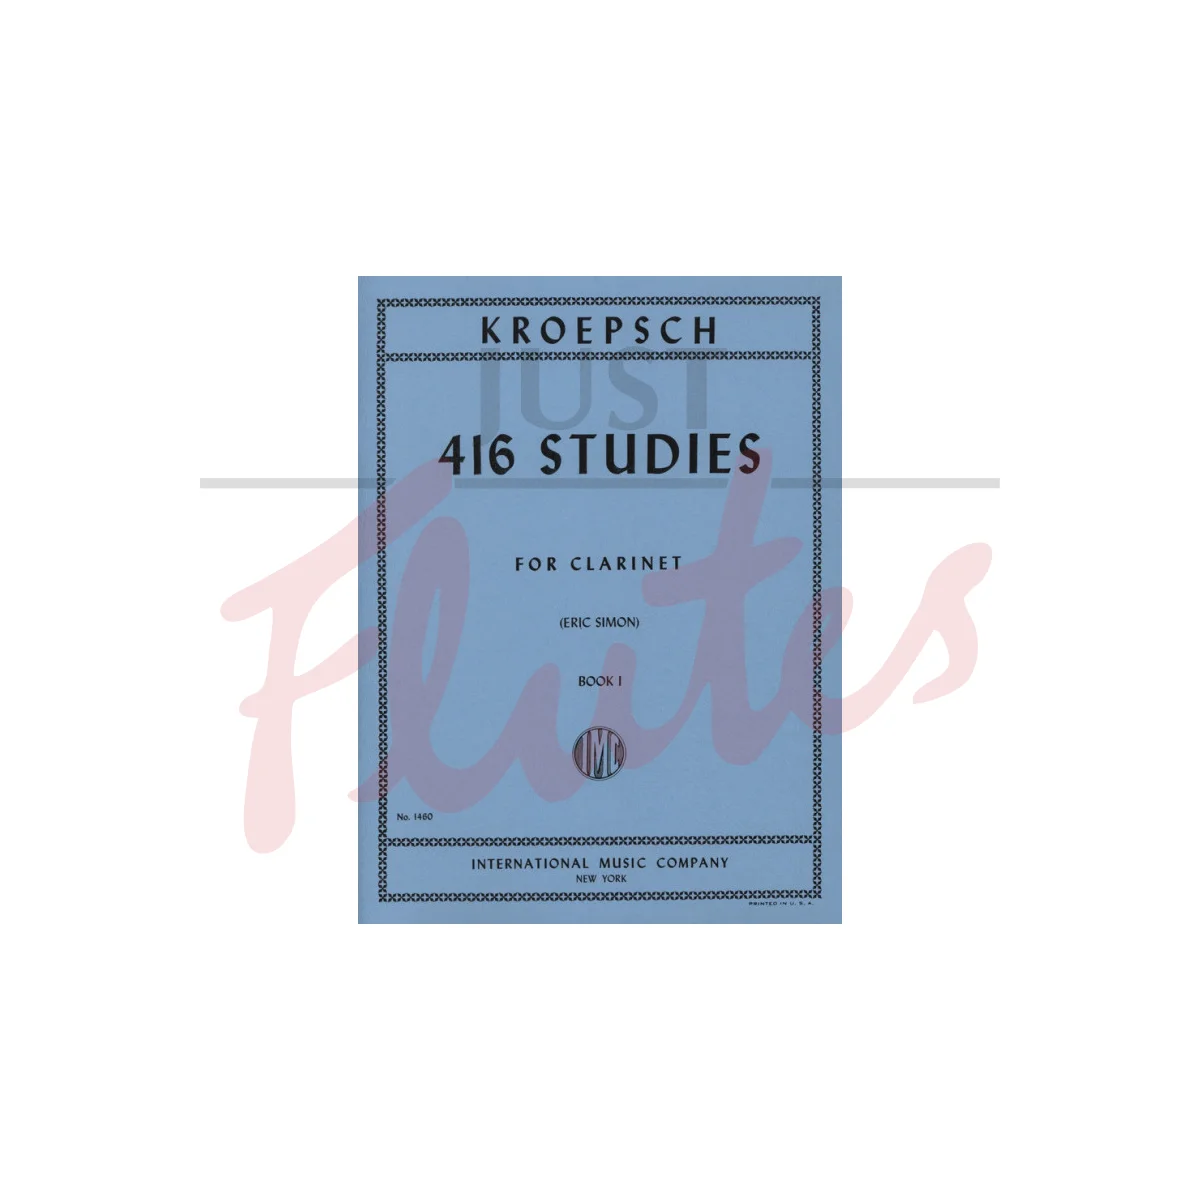 416 Studies for Clarinet, Vol. 1